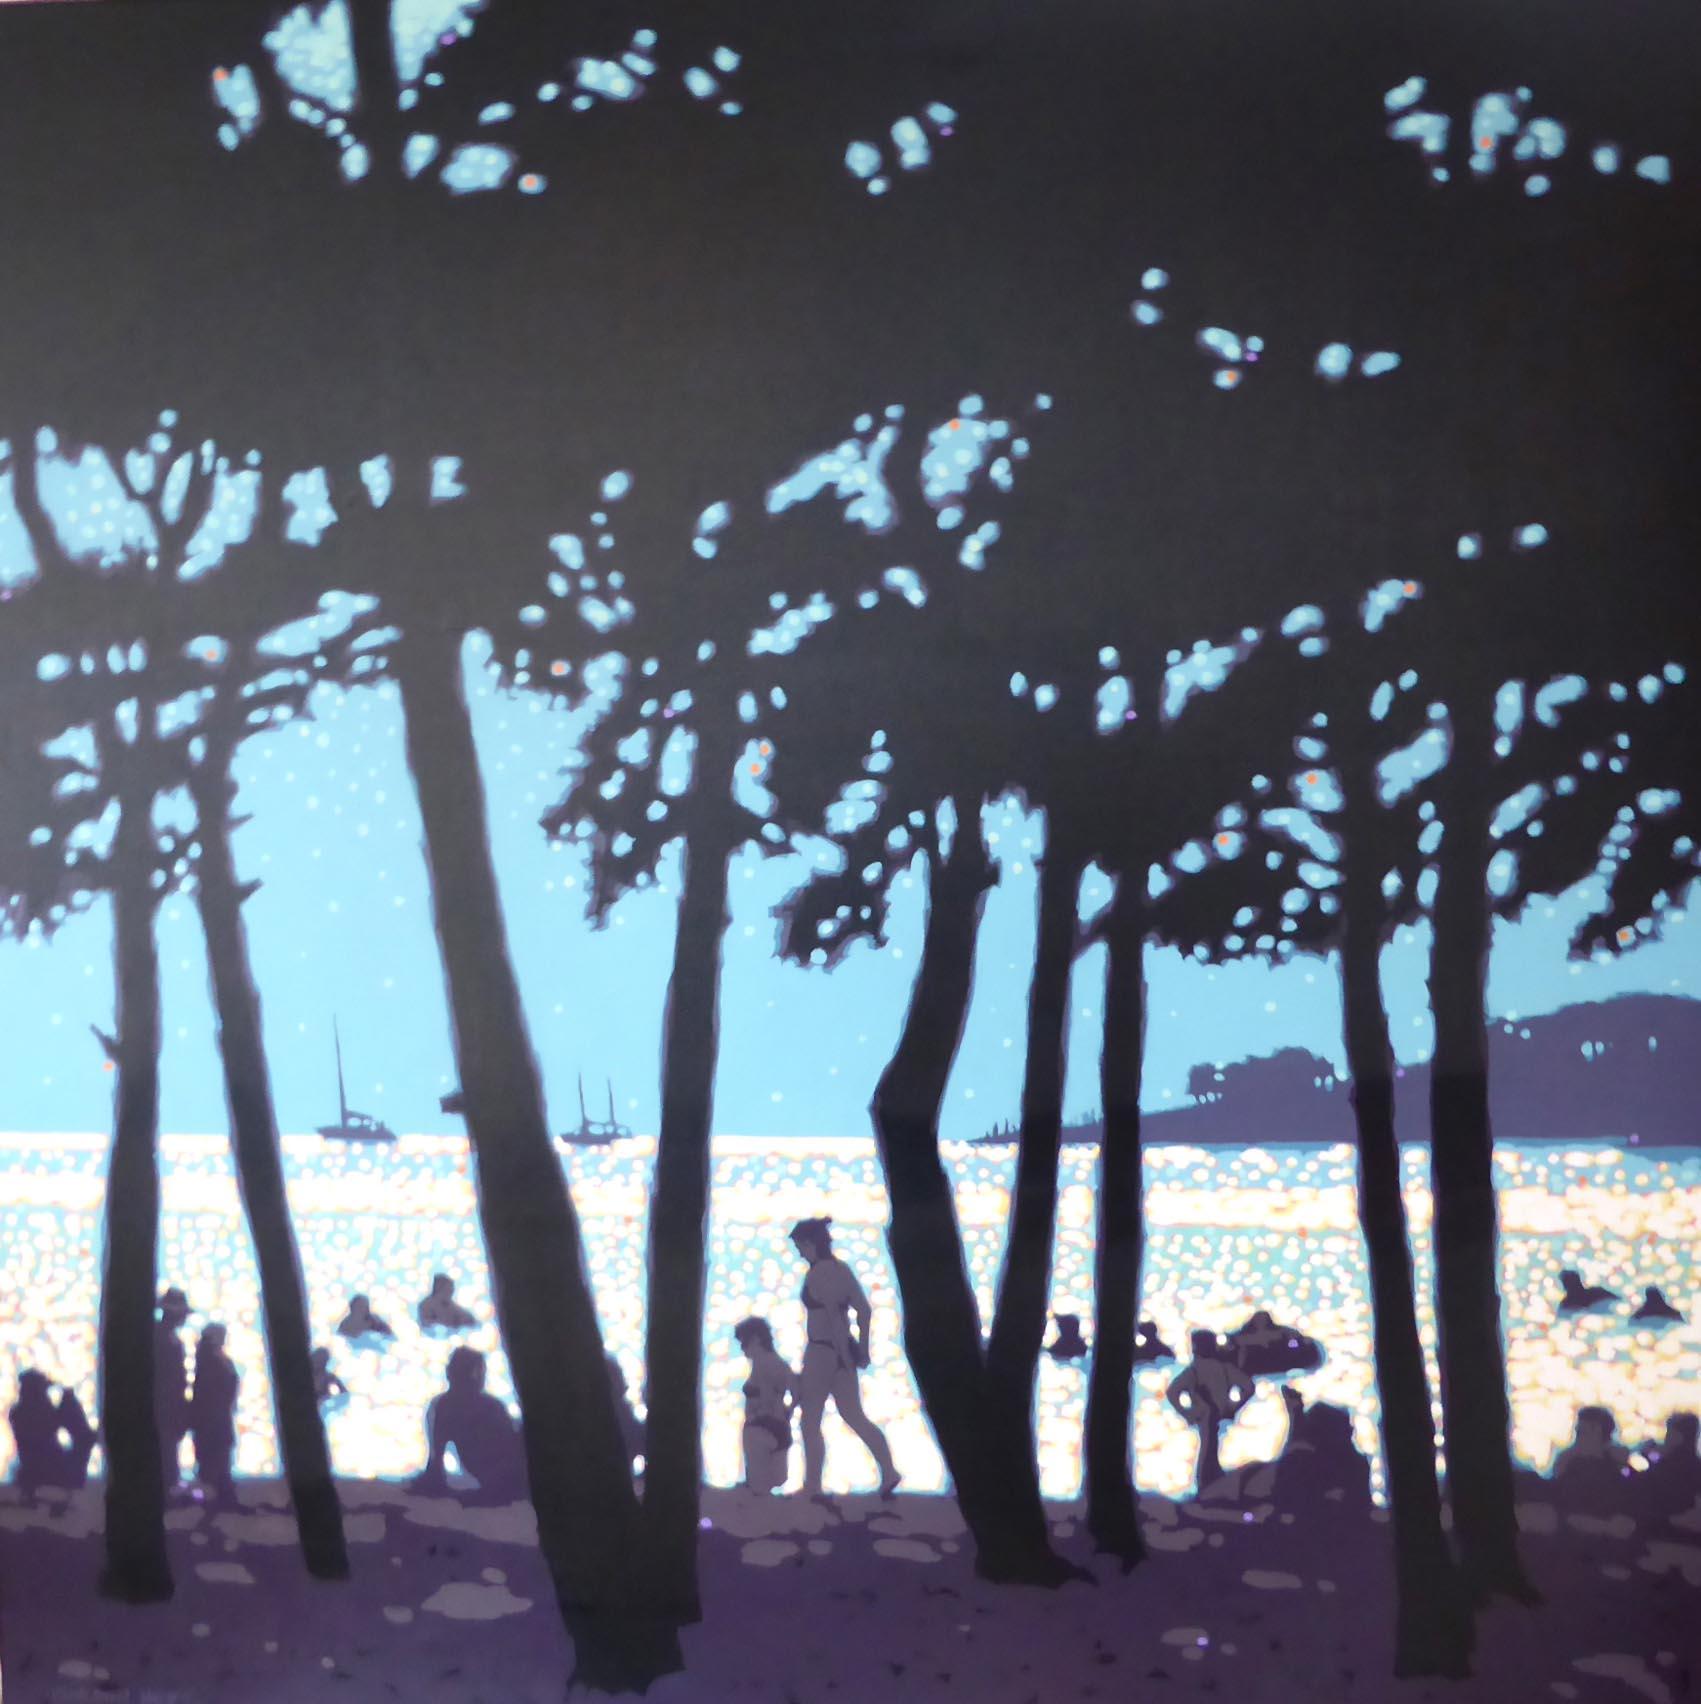 Gordon Hunt Landscape Painting - Mediterranean Sparkles, impressionist style seascape beach painting contemporary